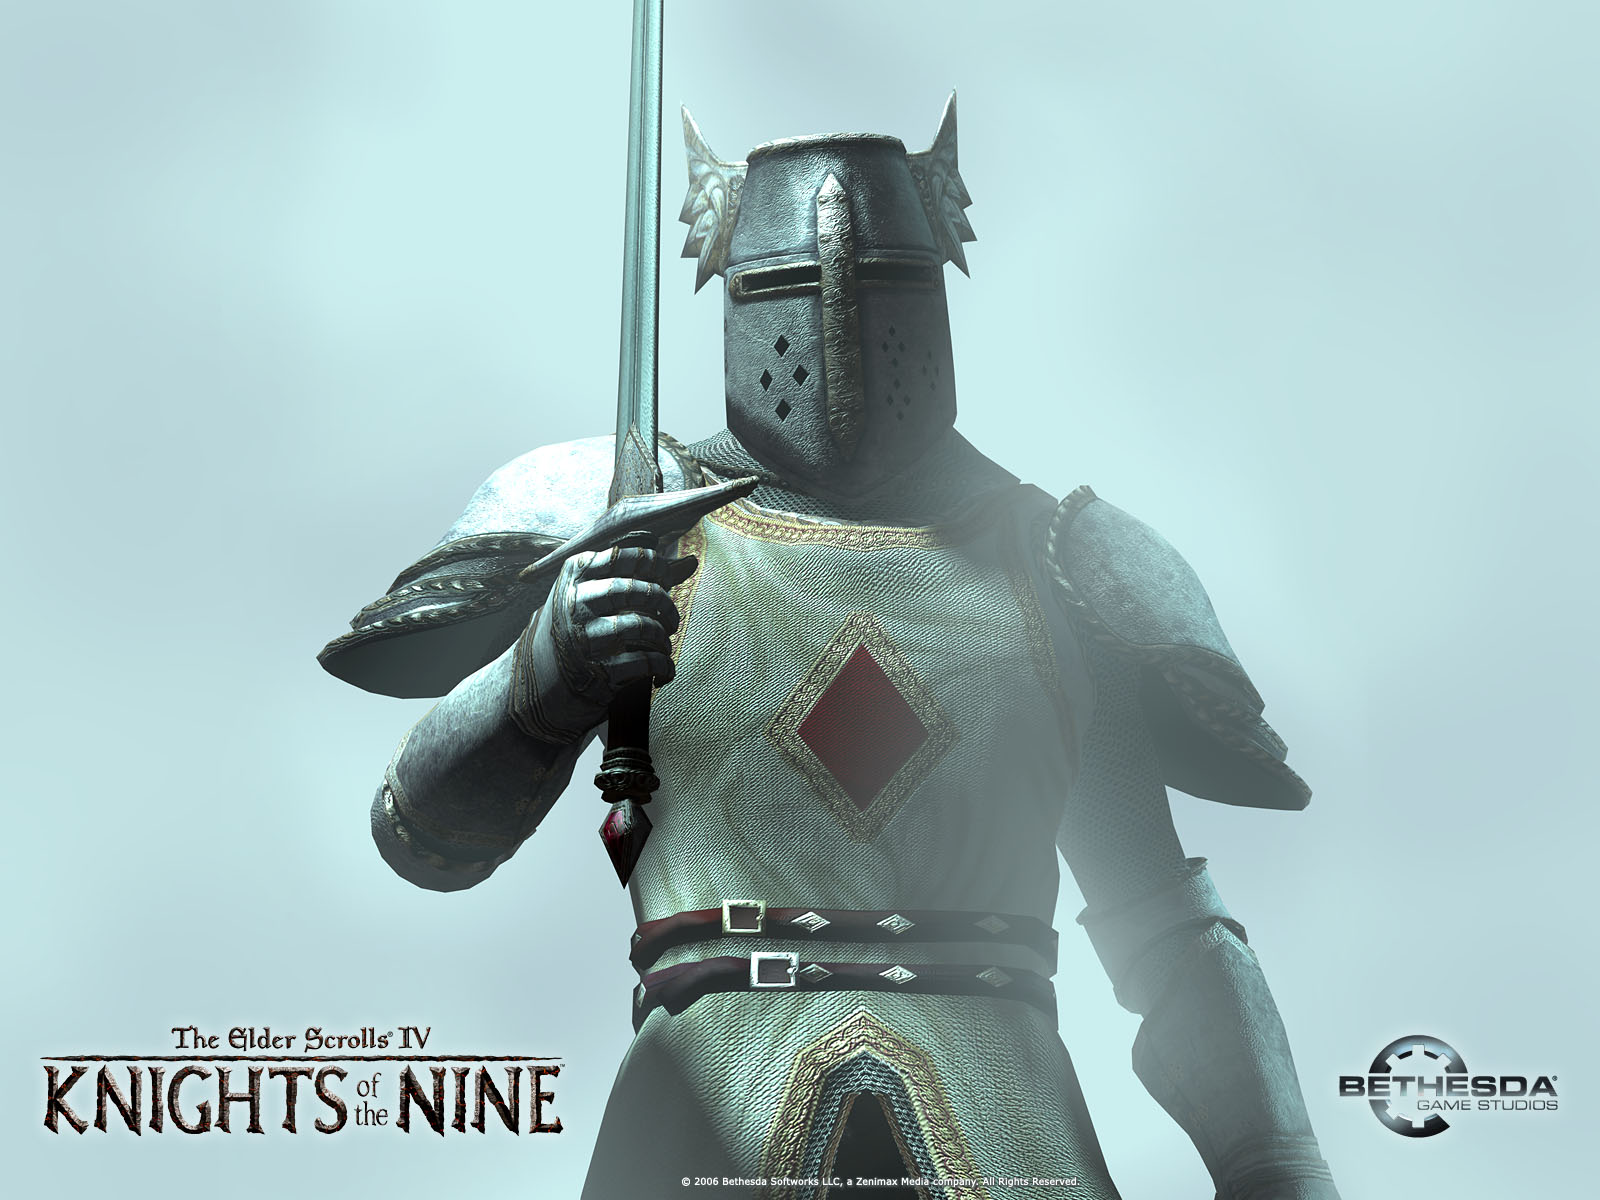 The-Elder-Scrolls-IV-Oblivion-Knights-of-the-Nine-5-HWTFMH9P7S-1600x1200.jpg